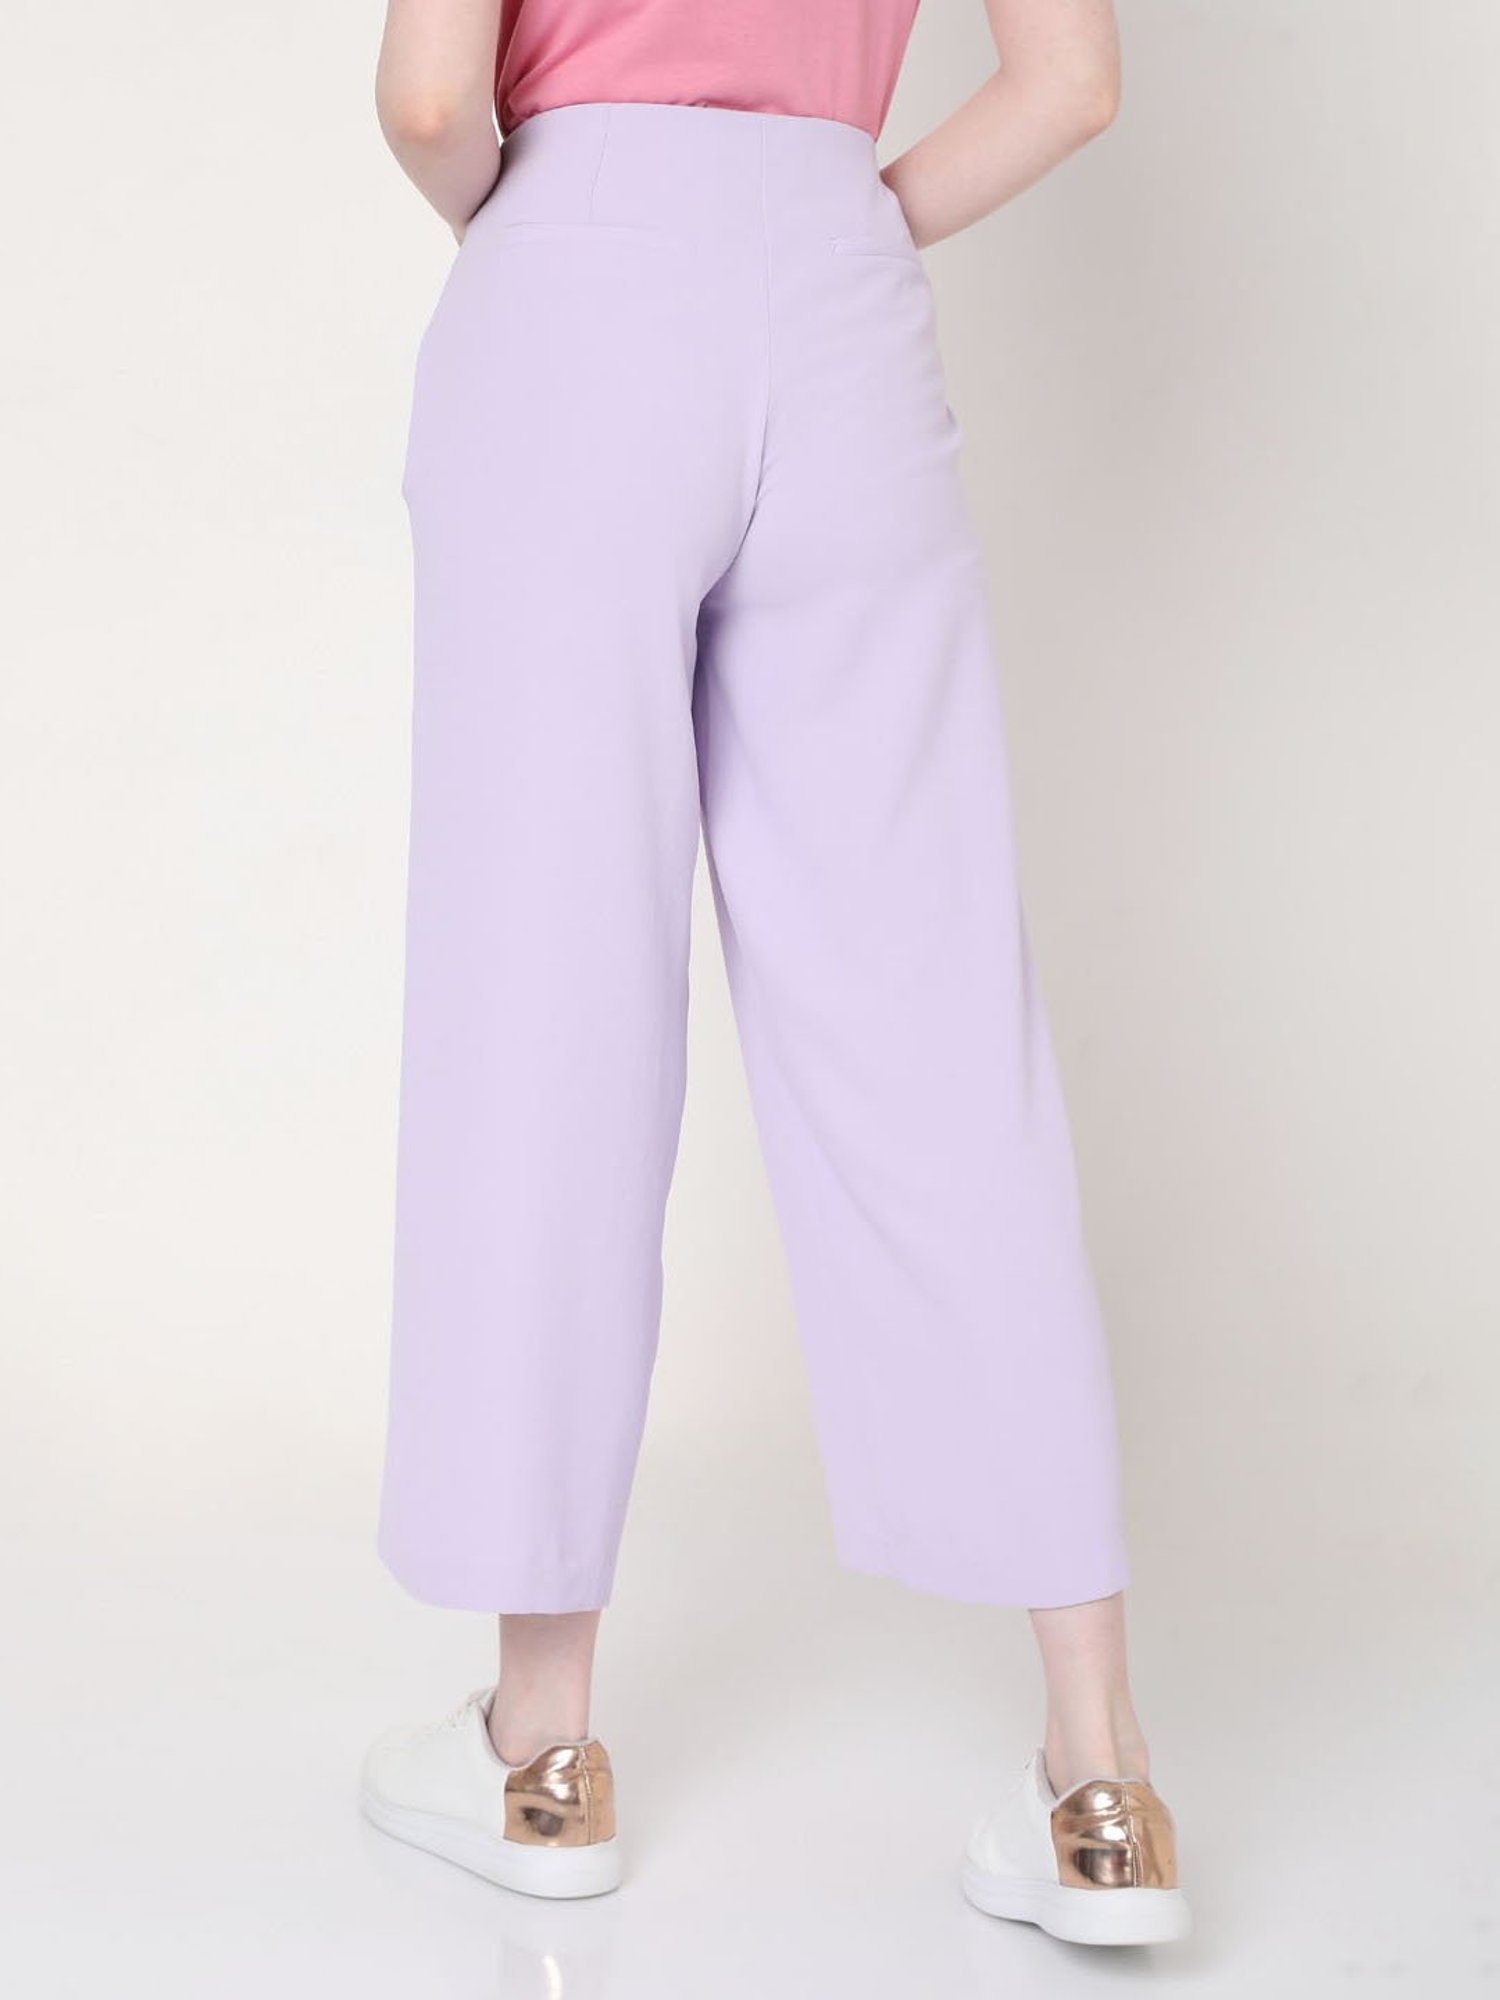 Buy Lavender Cotton Modal Pants  BGAE24BG30JUL  The loom